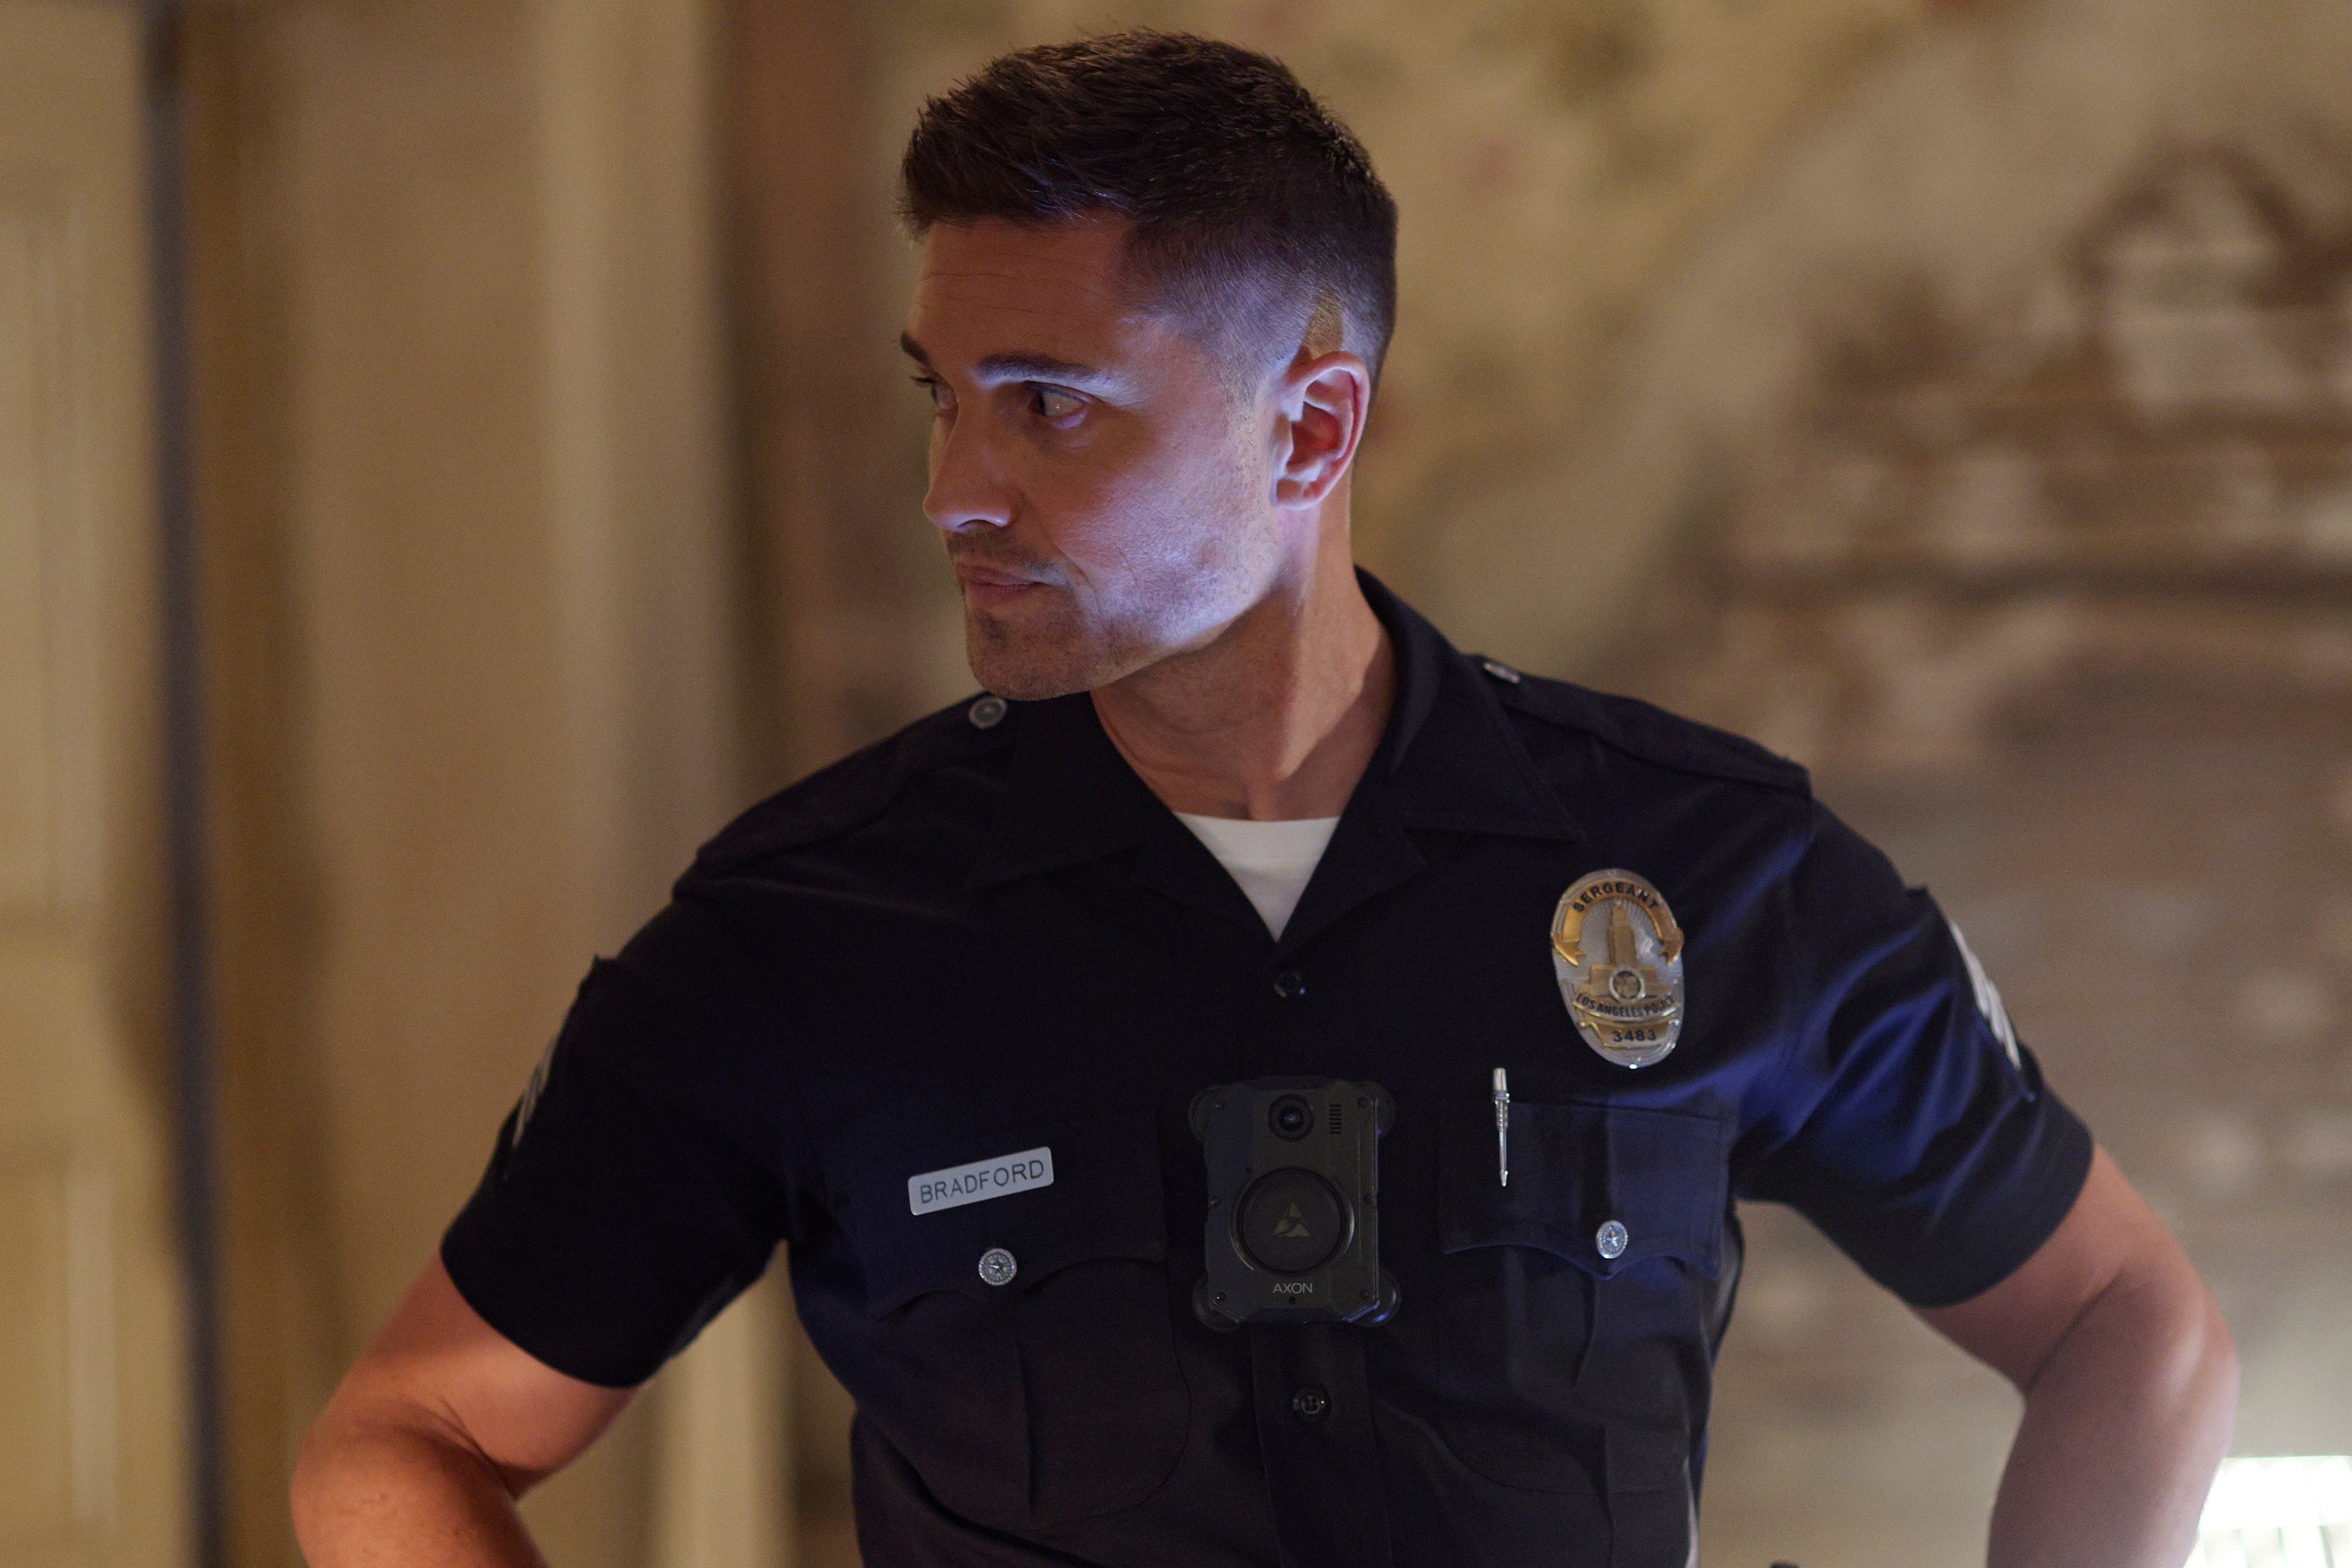 Eric Winter, in character as Tim Bradford in 'The Rookie' Season 5, wears his dark blue cop uniform.